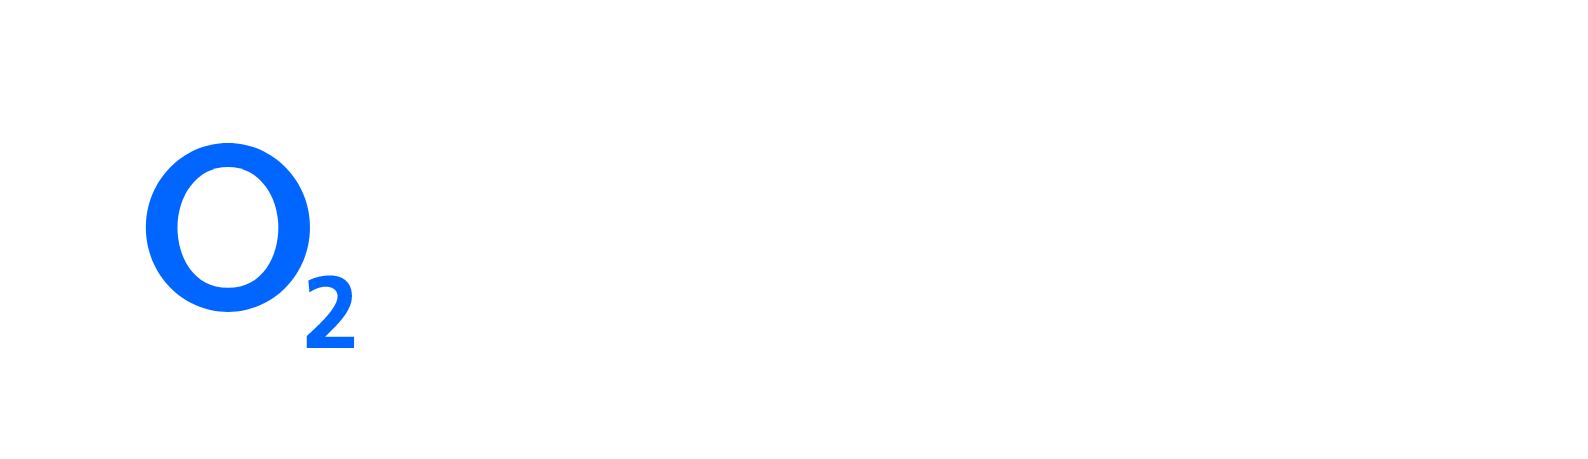 Telefónica Deutschland (O2) logo grand pour les fonds sombres (PNG transparent)